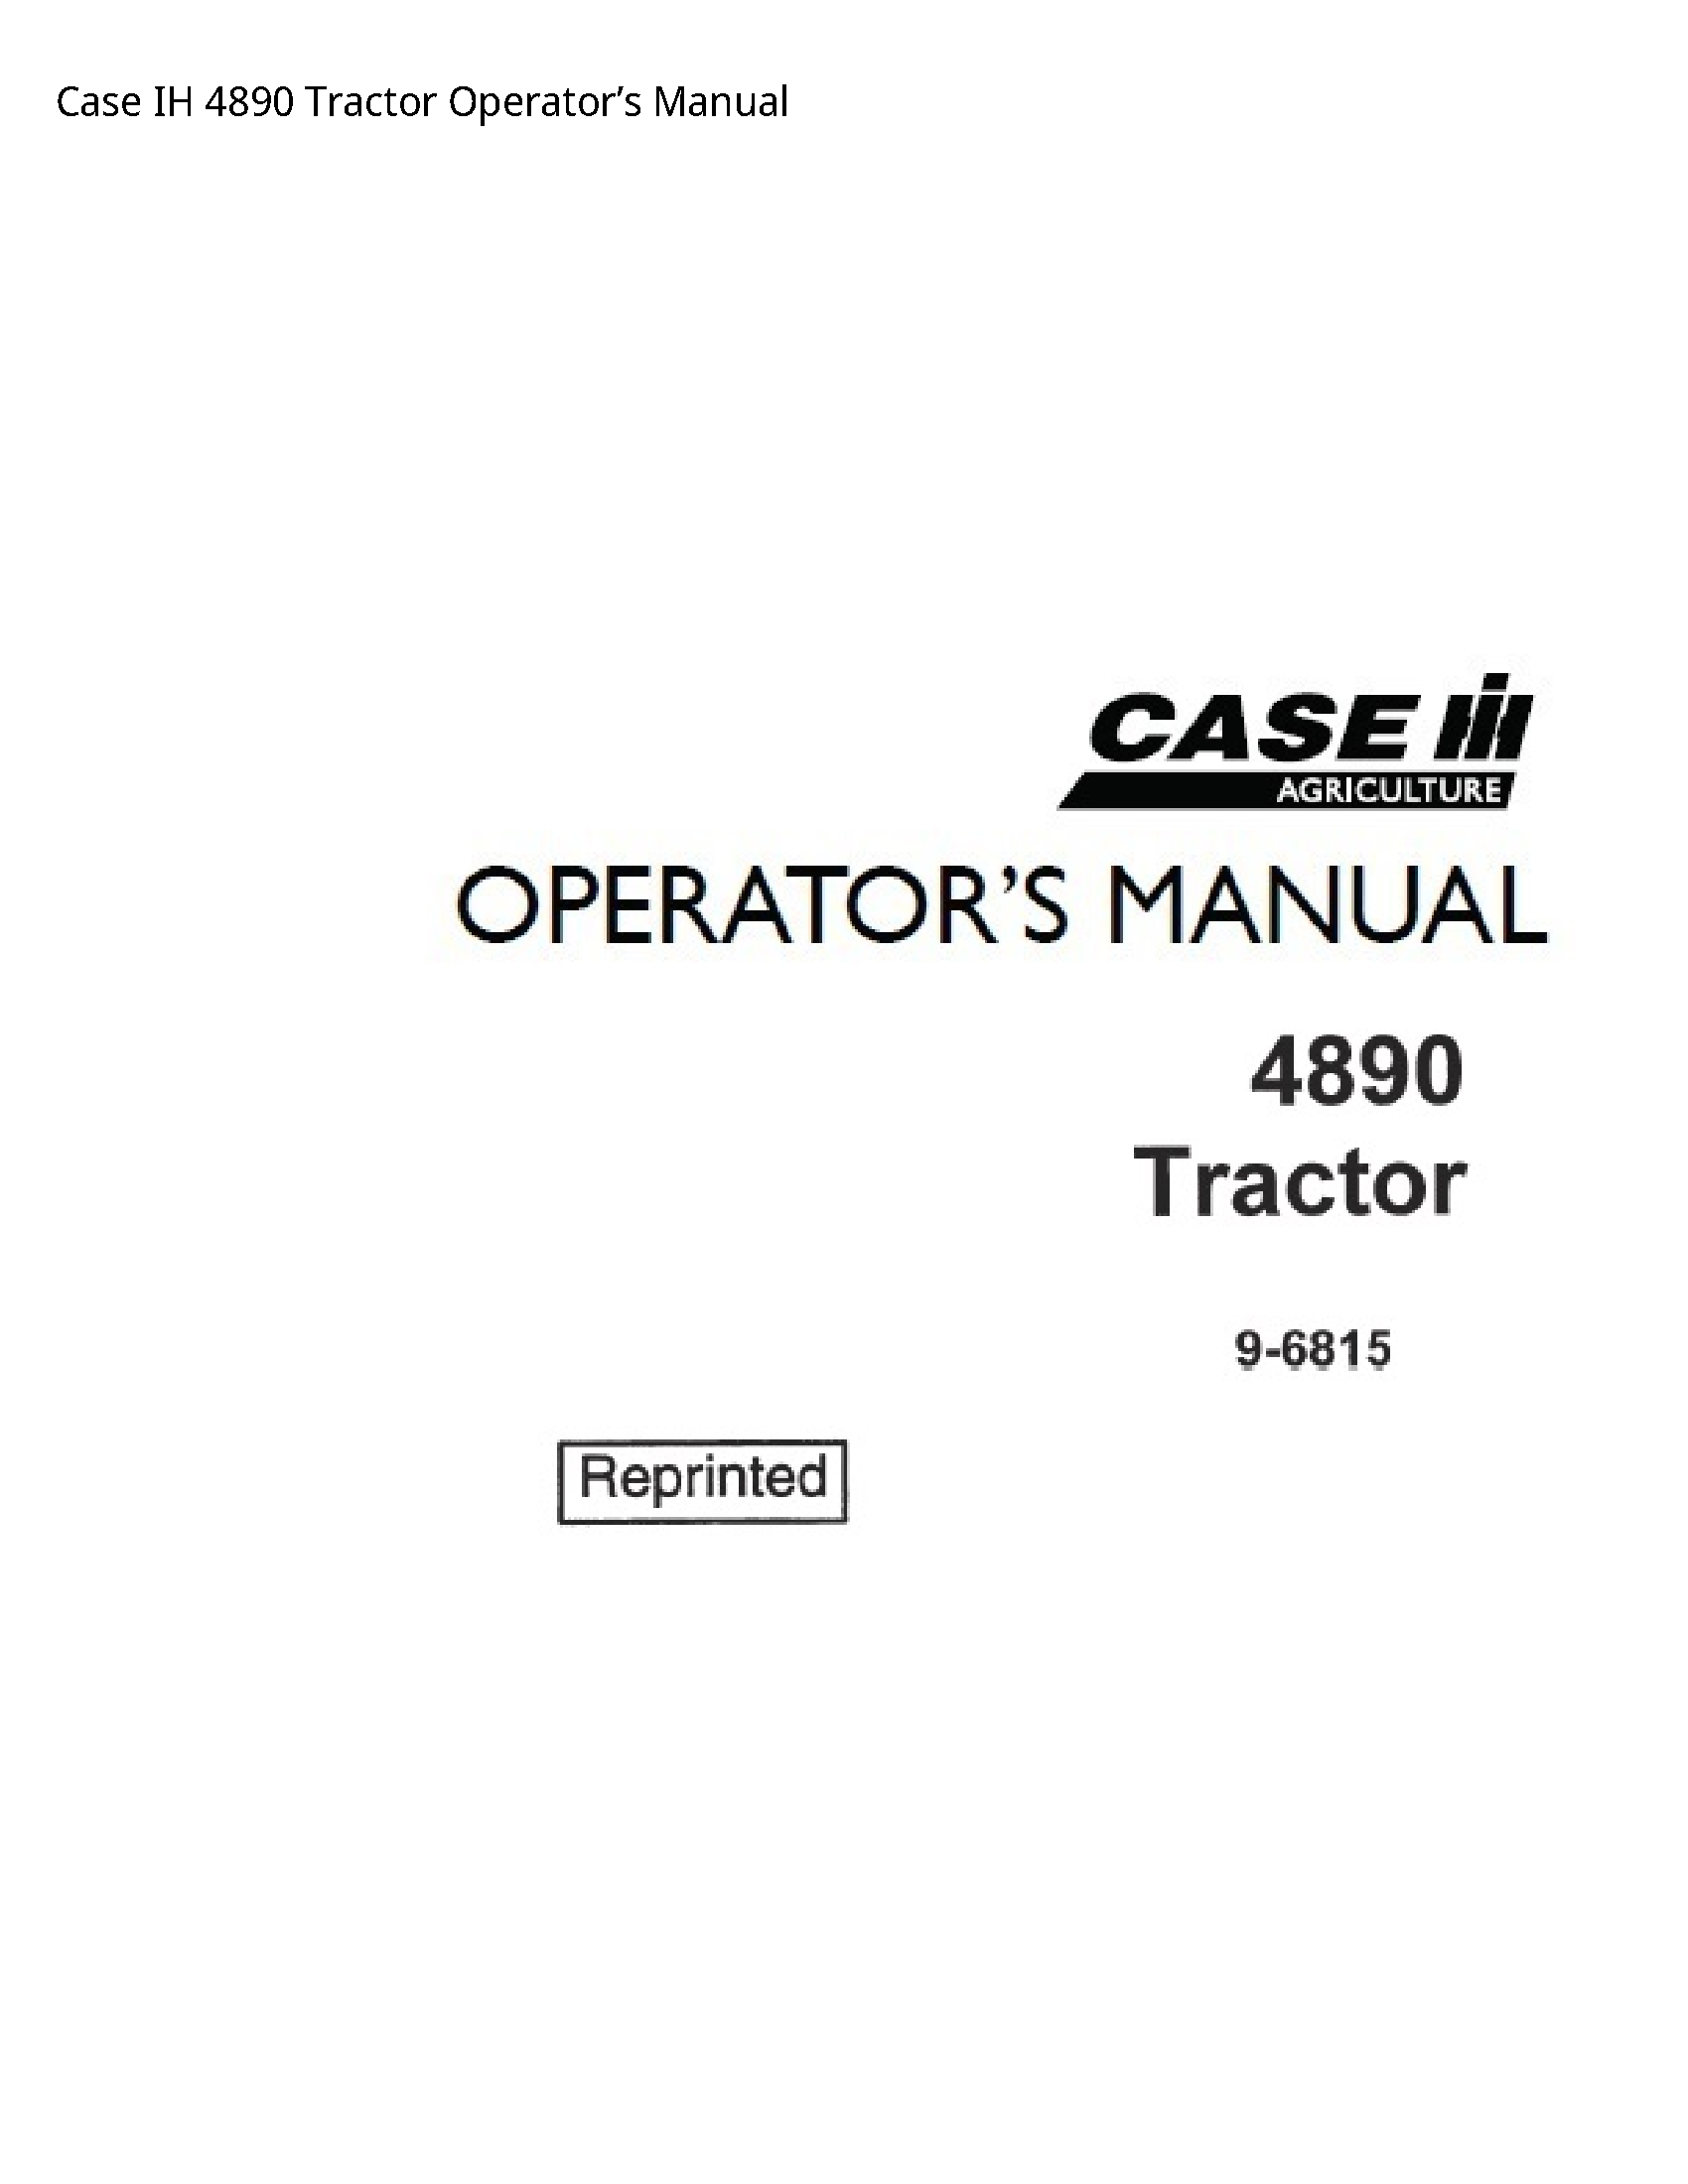 Case/Case IH 4890 IH Tractor Operator’s manual